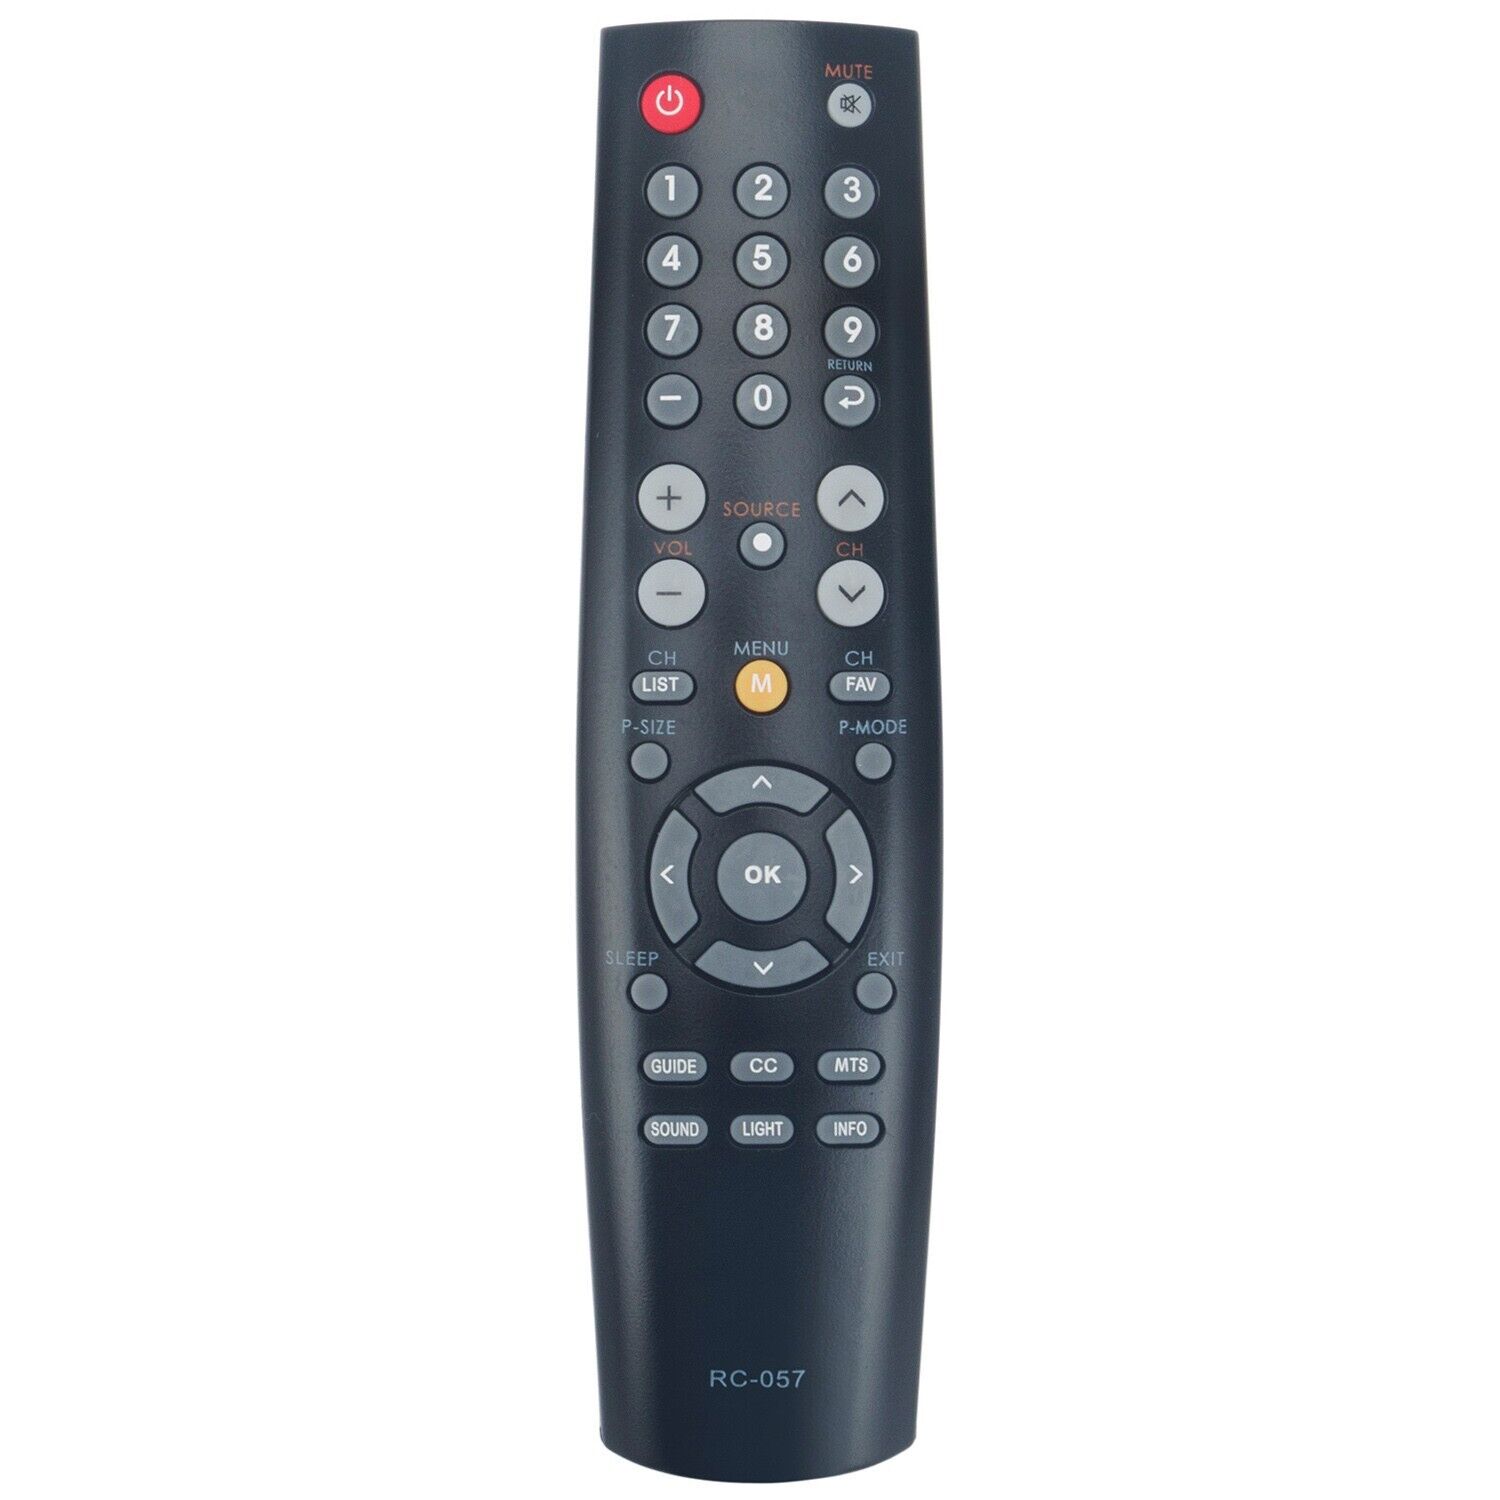 thinkstar Replace Remote For Coby Tv Ledtv1926 Tftv2225 Ledtv3226 Tftv2425 Tftv3229